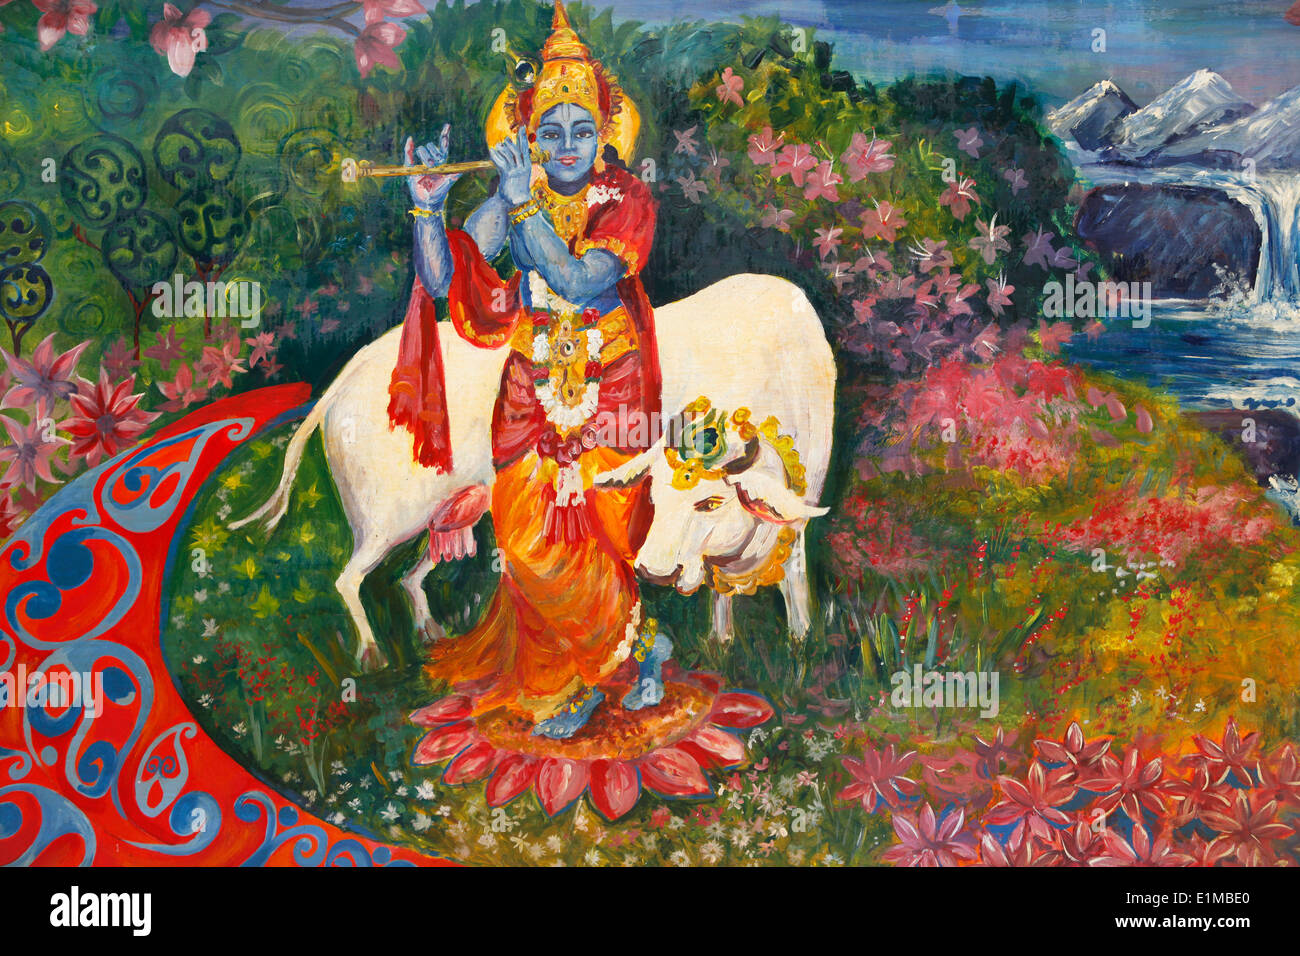 Bhaktivedanta Manor Painting depicting Krishna and a cow Stock Photo